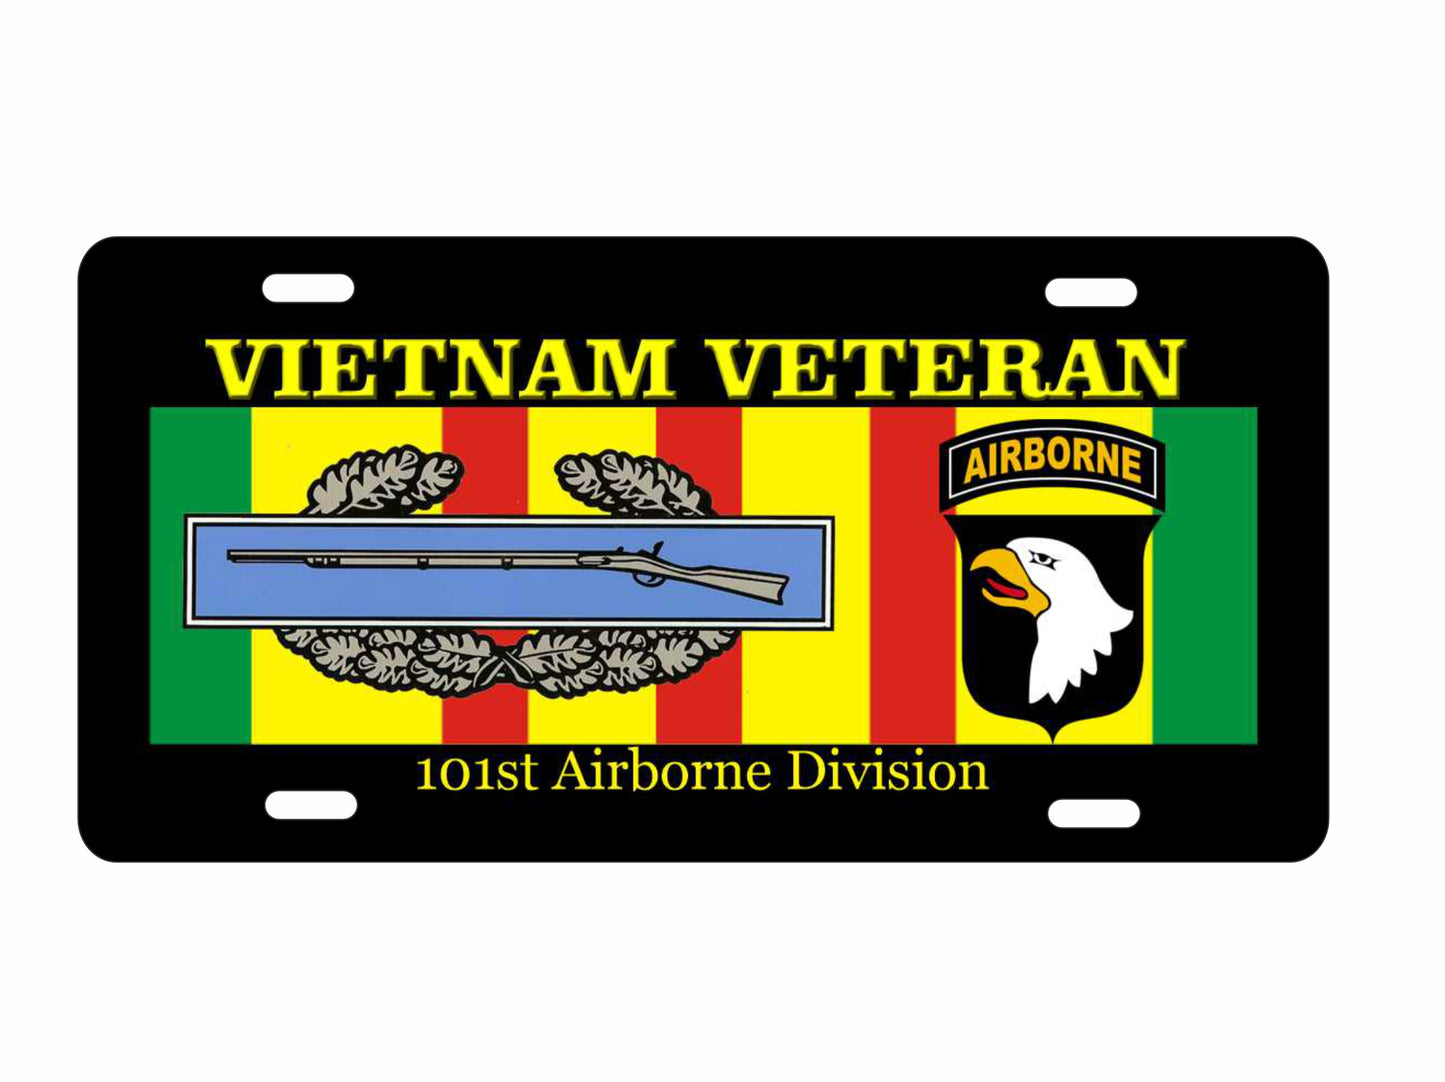 Vietnam veteran 101st airborne Division CIB novelty license plate car tag decorative military aluminum front plate